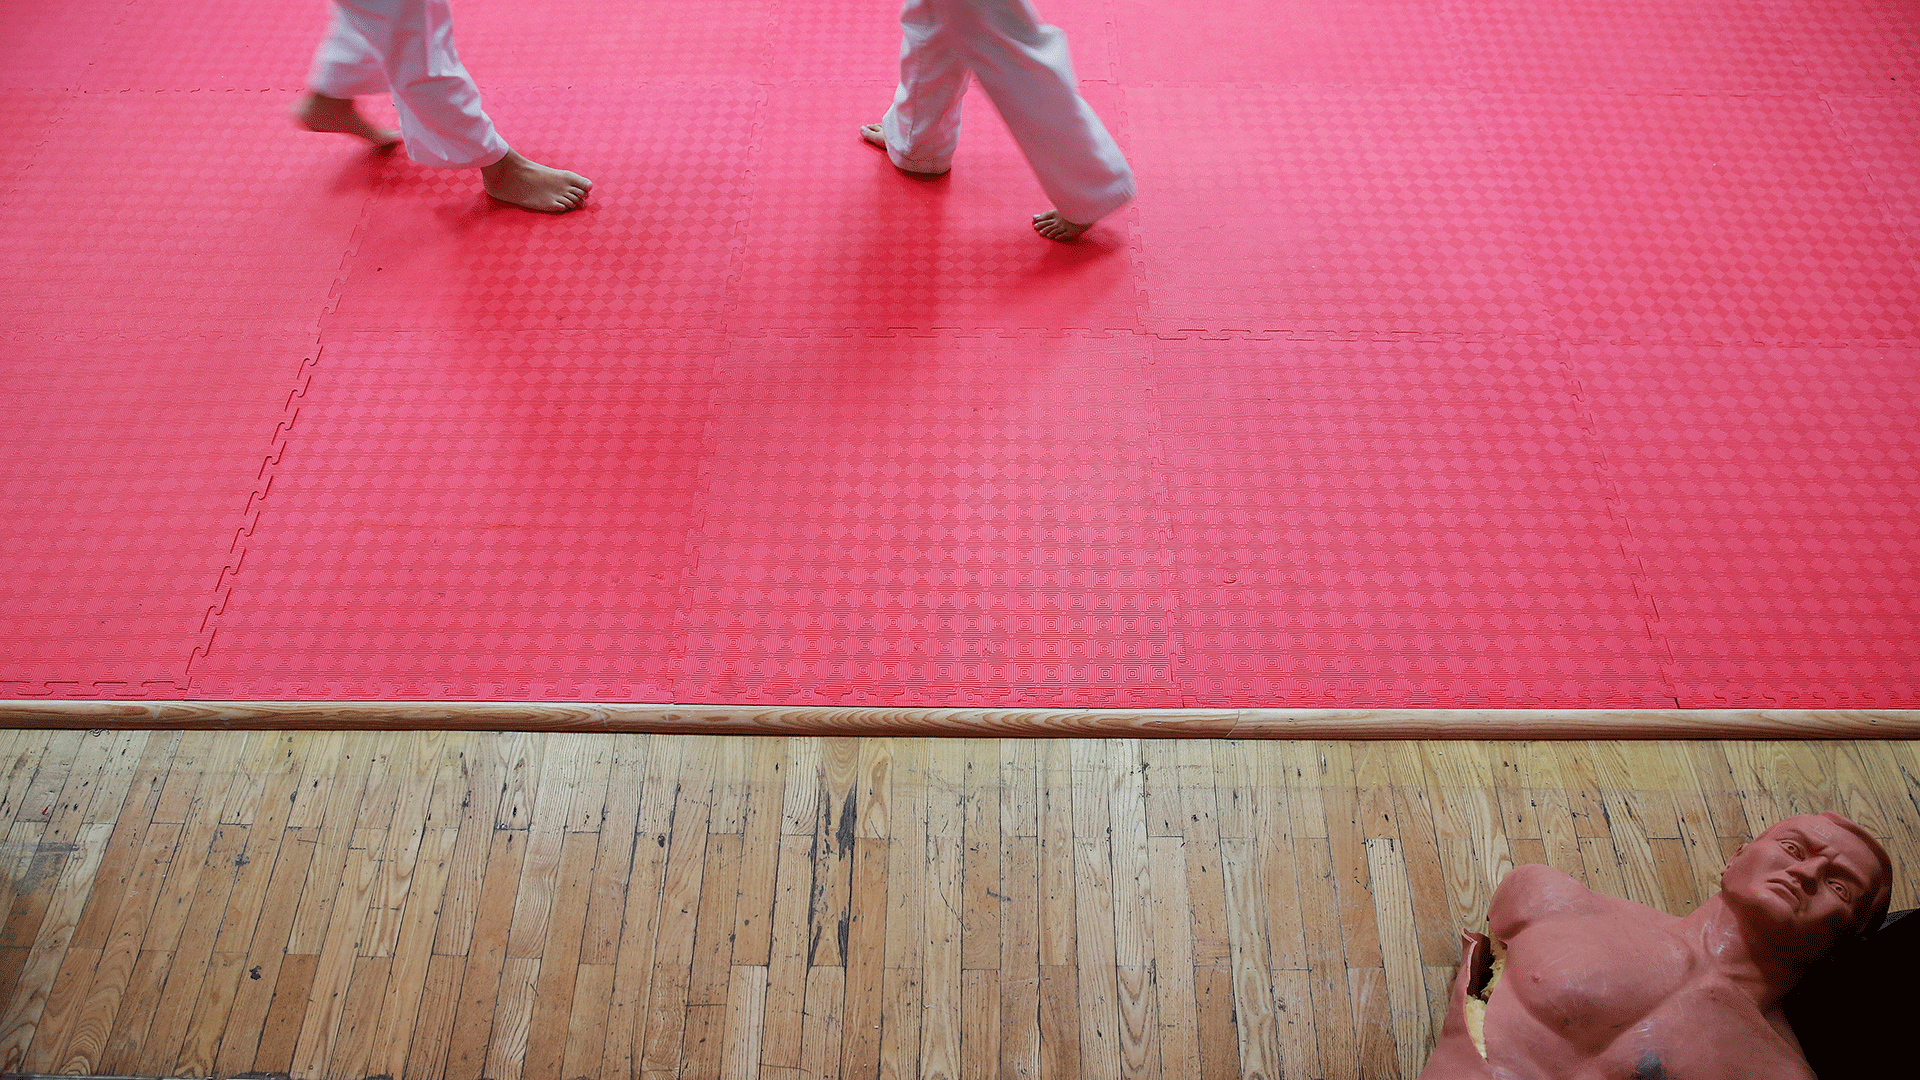 China investiga a un club de artes marciales que entrena a huérfanos para combatir